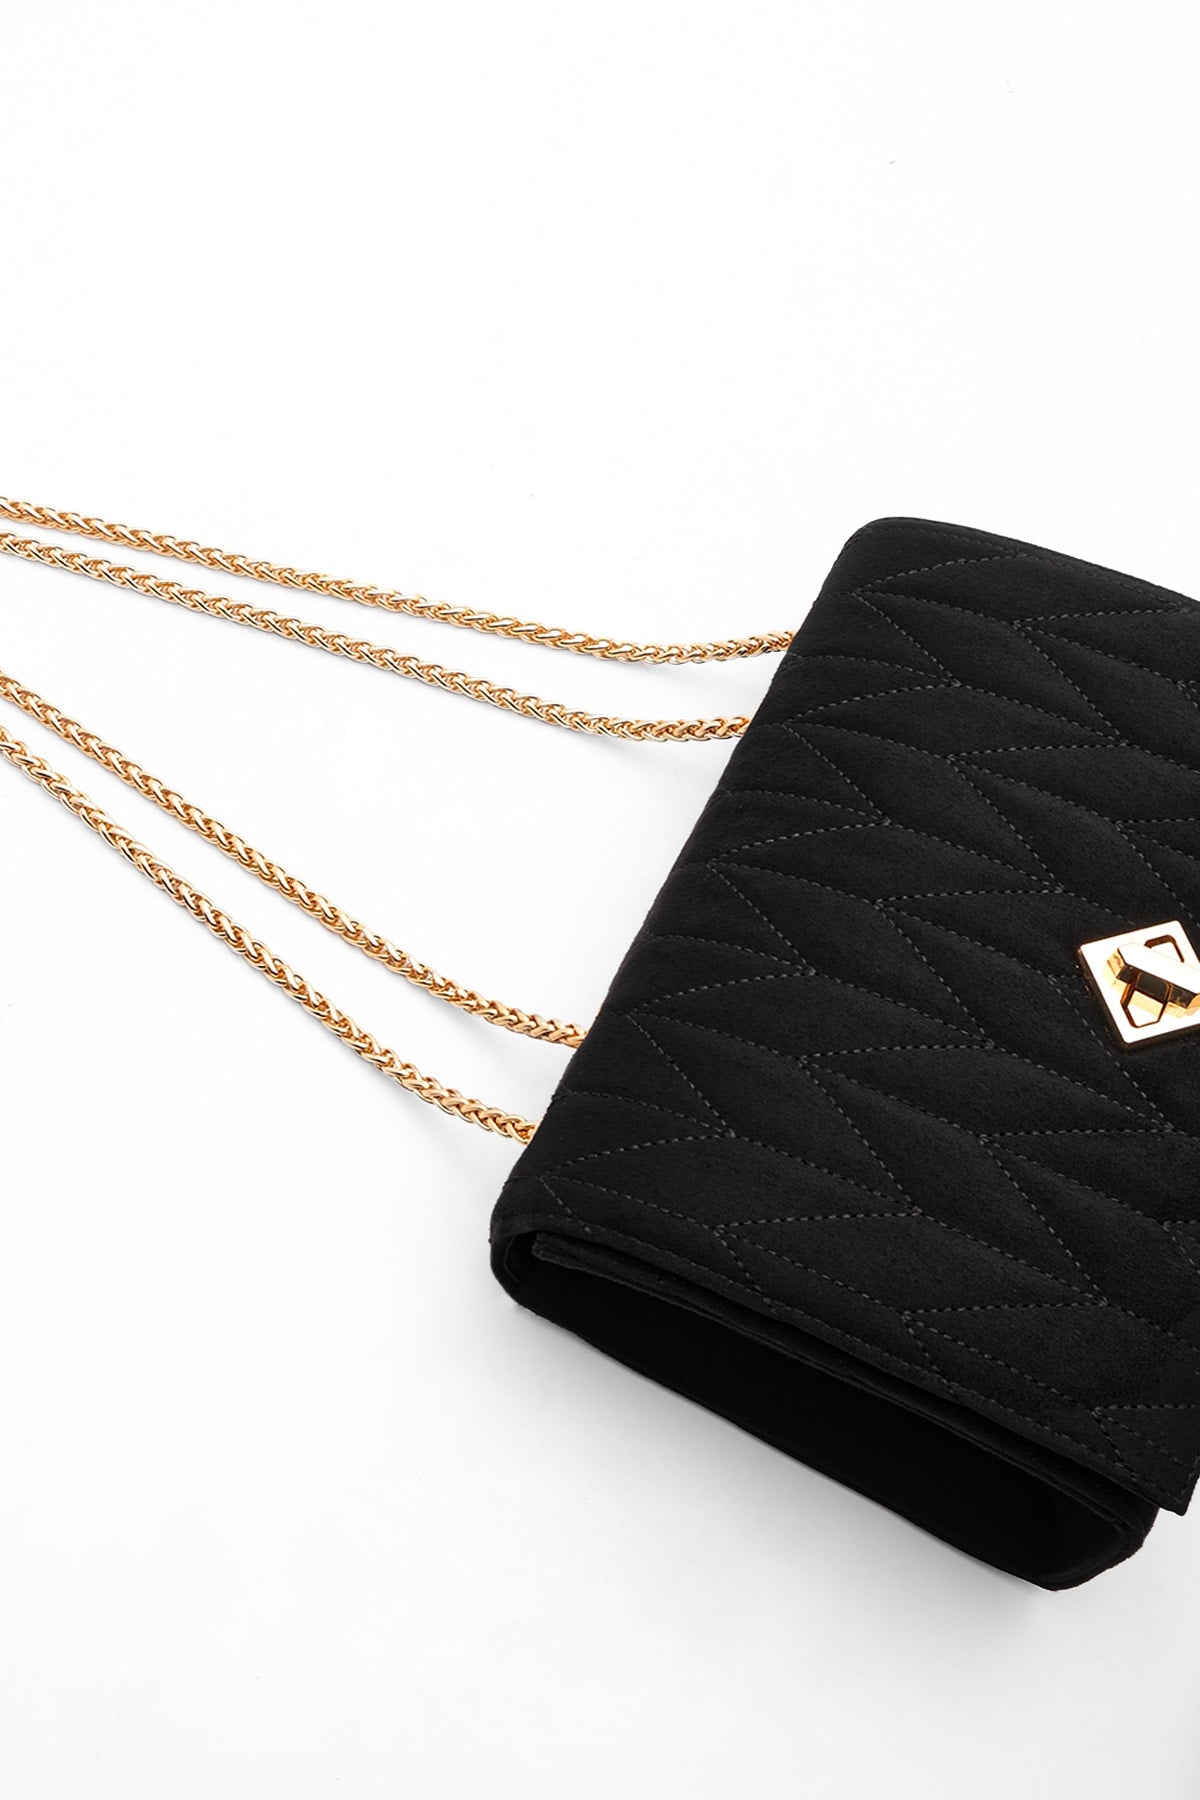 Women's Gold Color Chain Shoulder Bag Delbin Black Suede